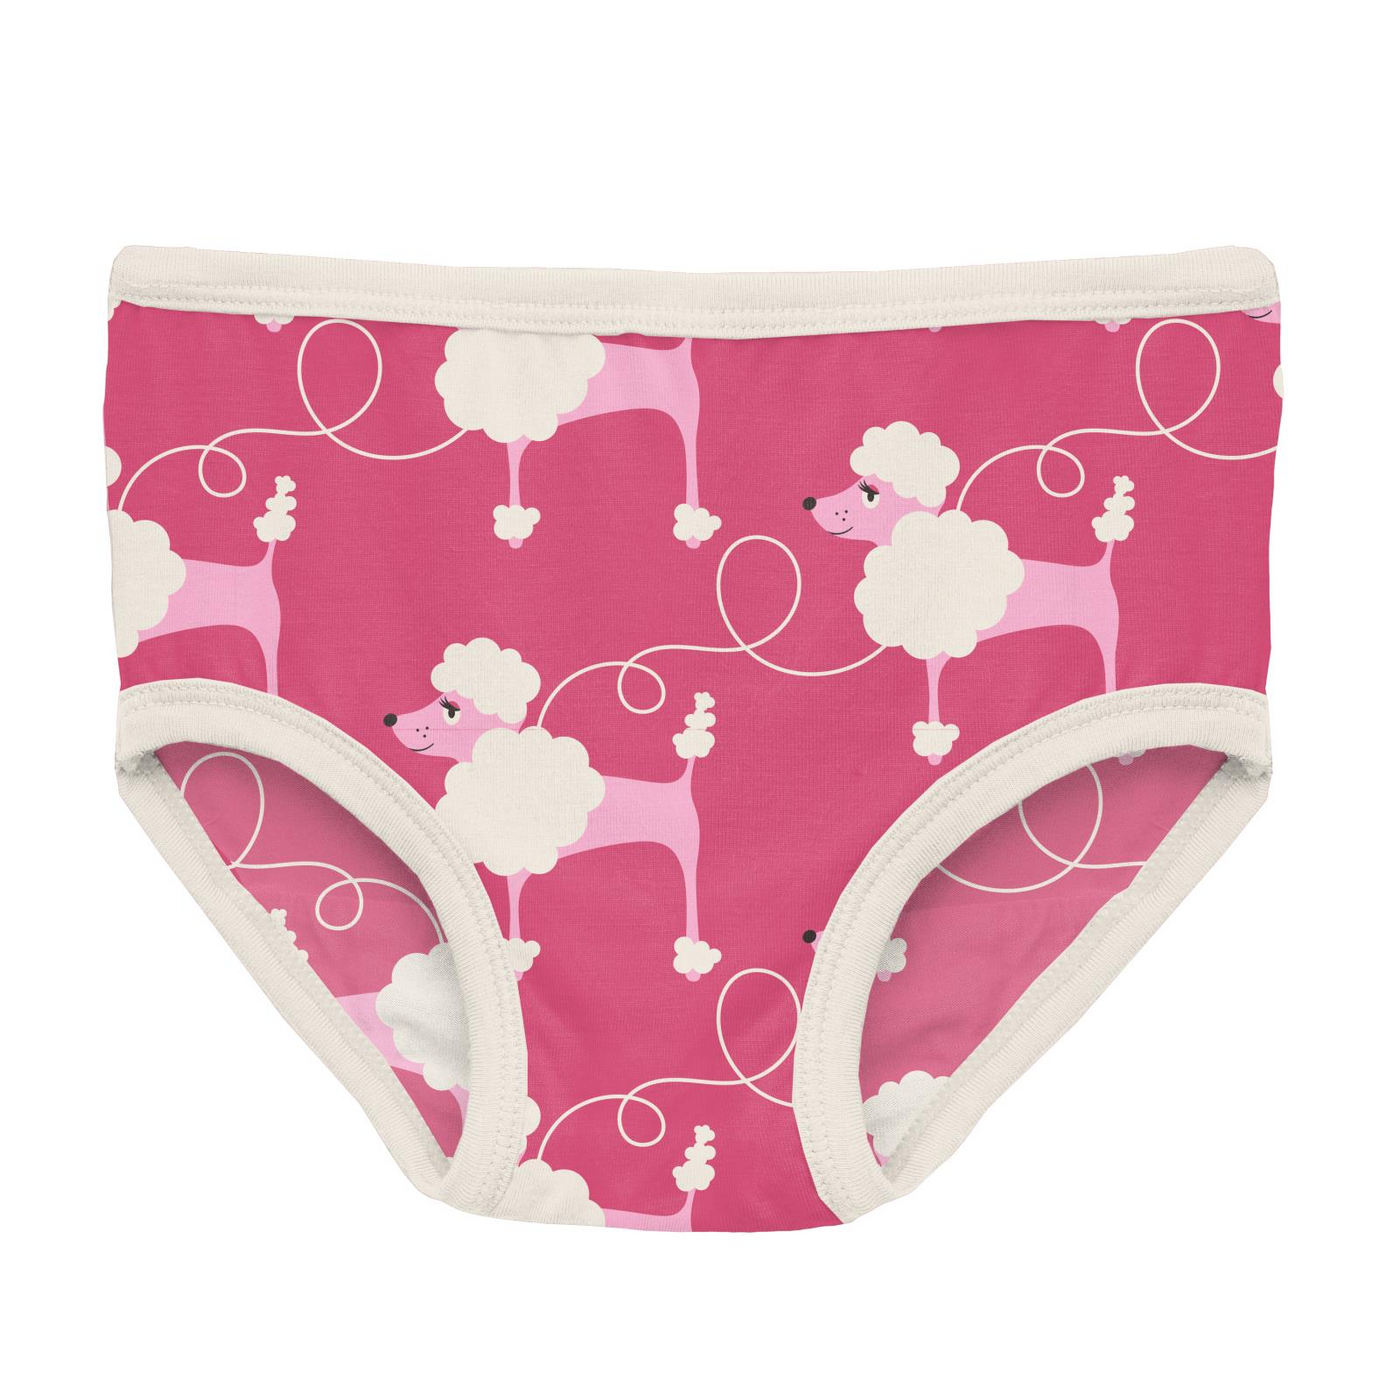 Kickee Pants Underwear Set of 3: Summer Sky Cheeseburger, Flamingo Poodles & Cotton Candy